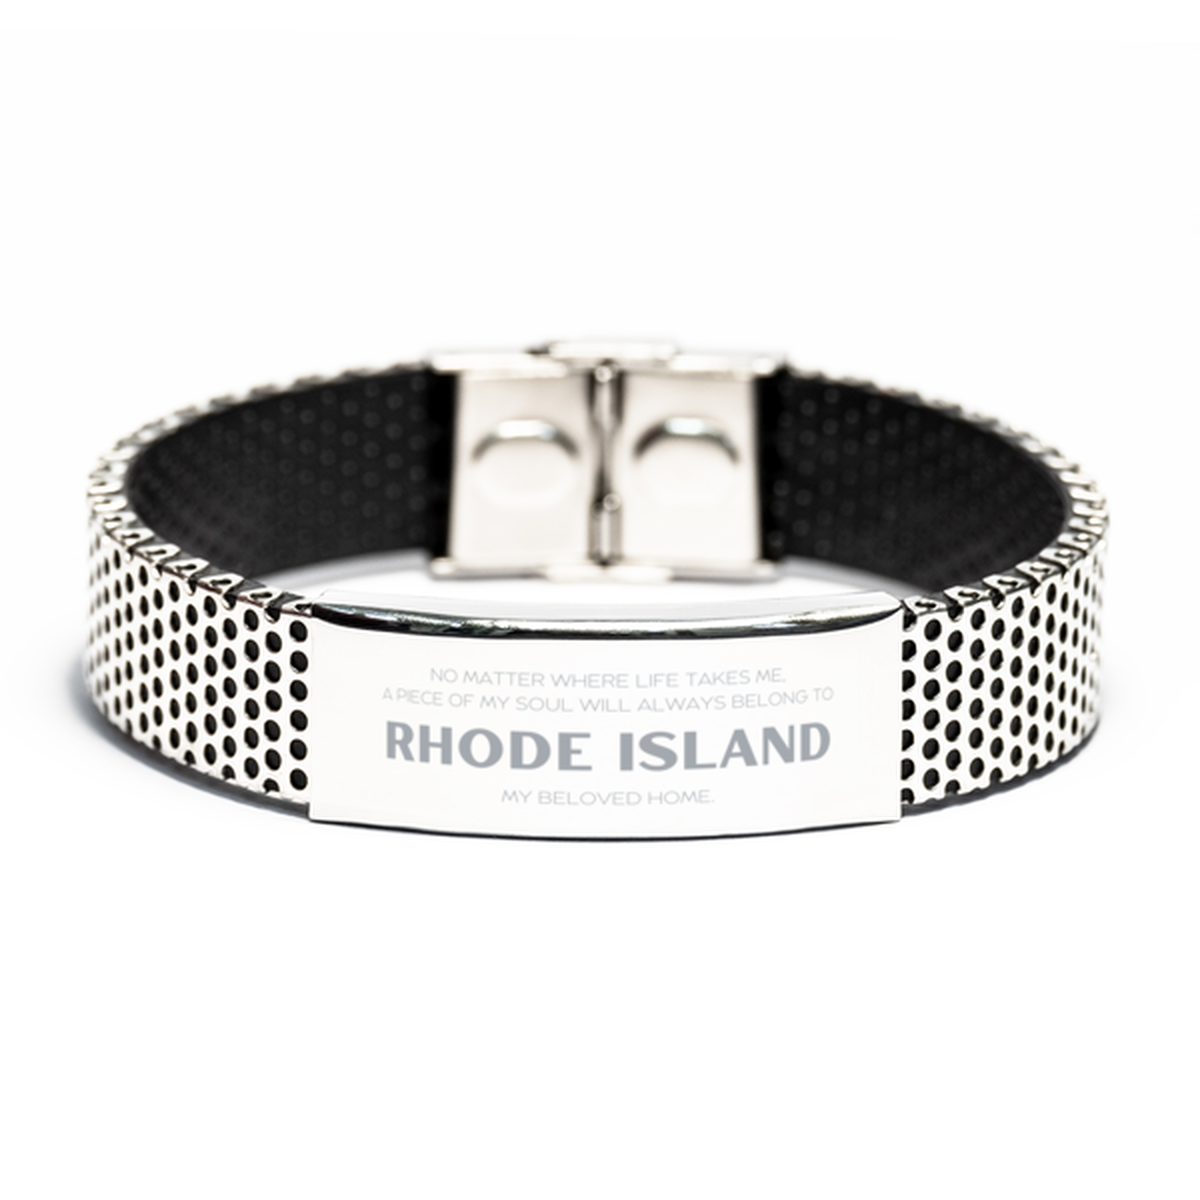 Love Rhode Island State Gifts, My soul will always belong to Rhode Island, Proud Stainless Steel Bracelet, Birthday Unique Gifts For Rhode Island Men, Women, Friends